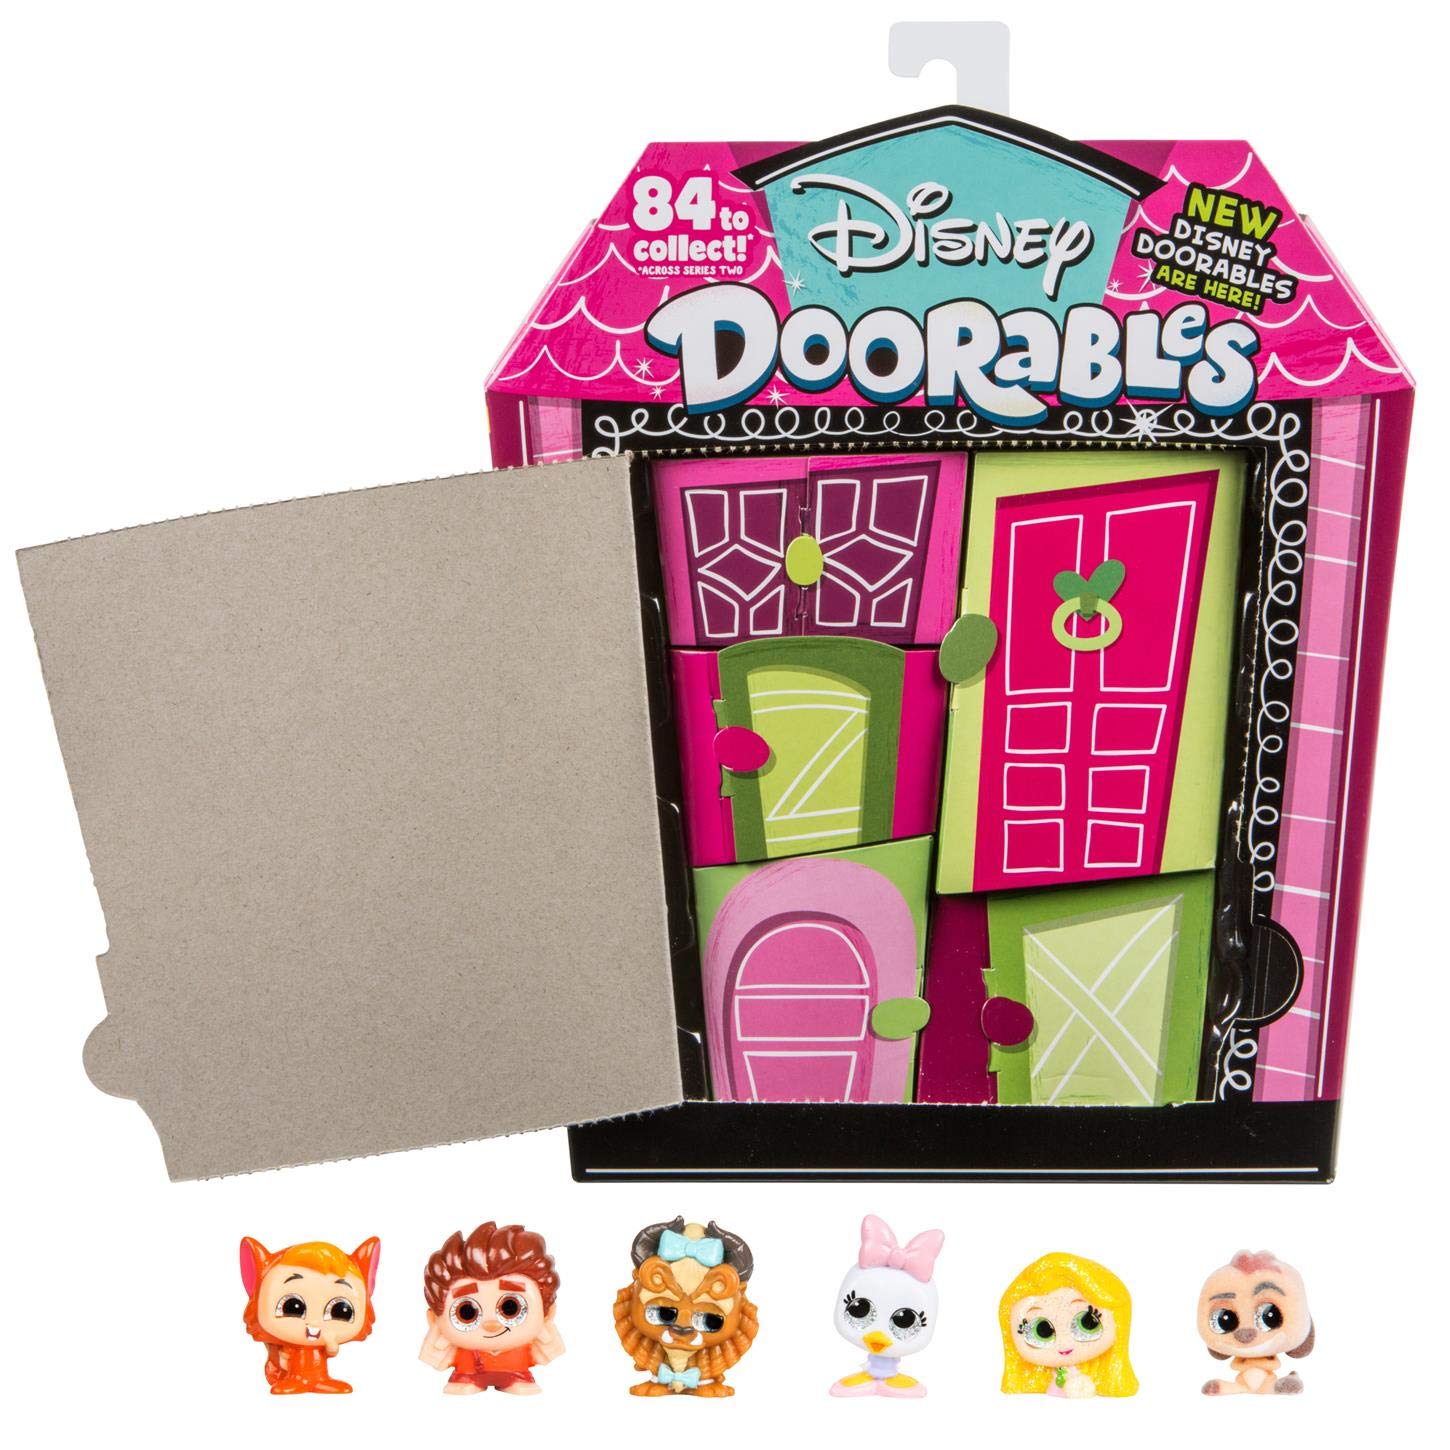 Disney Doorables Multi Peek Toy Figure - 84pcs, New Season, Multicolor, Ages 5+